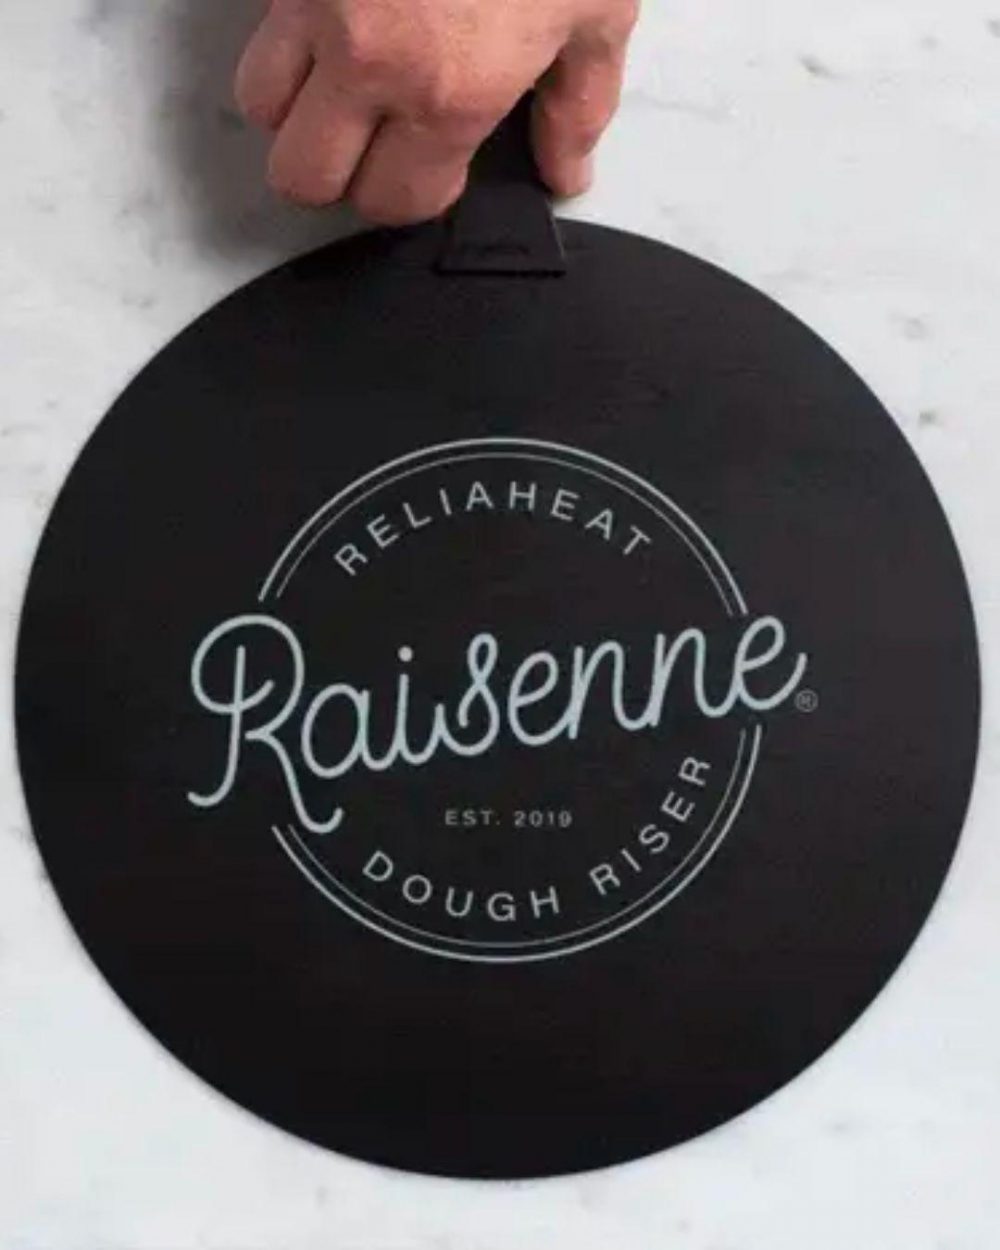 Raisenne Dough Riser Blog